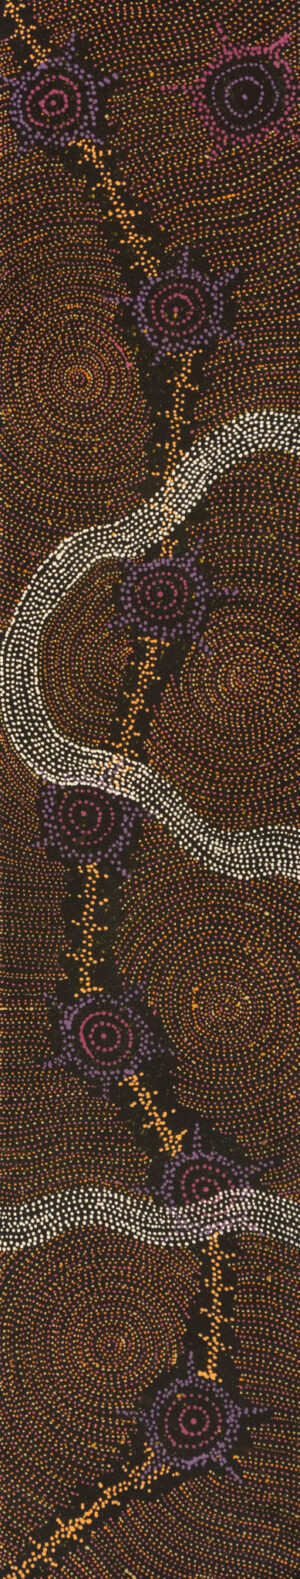 Shanna Napanangka Williams Aboriginal Art